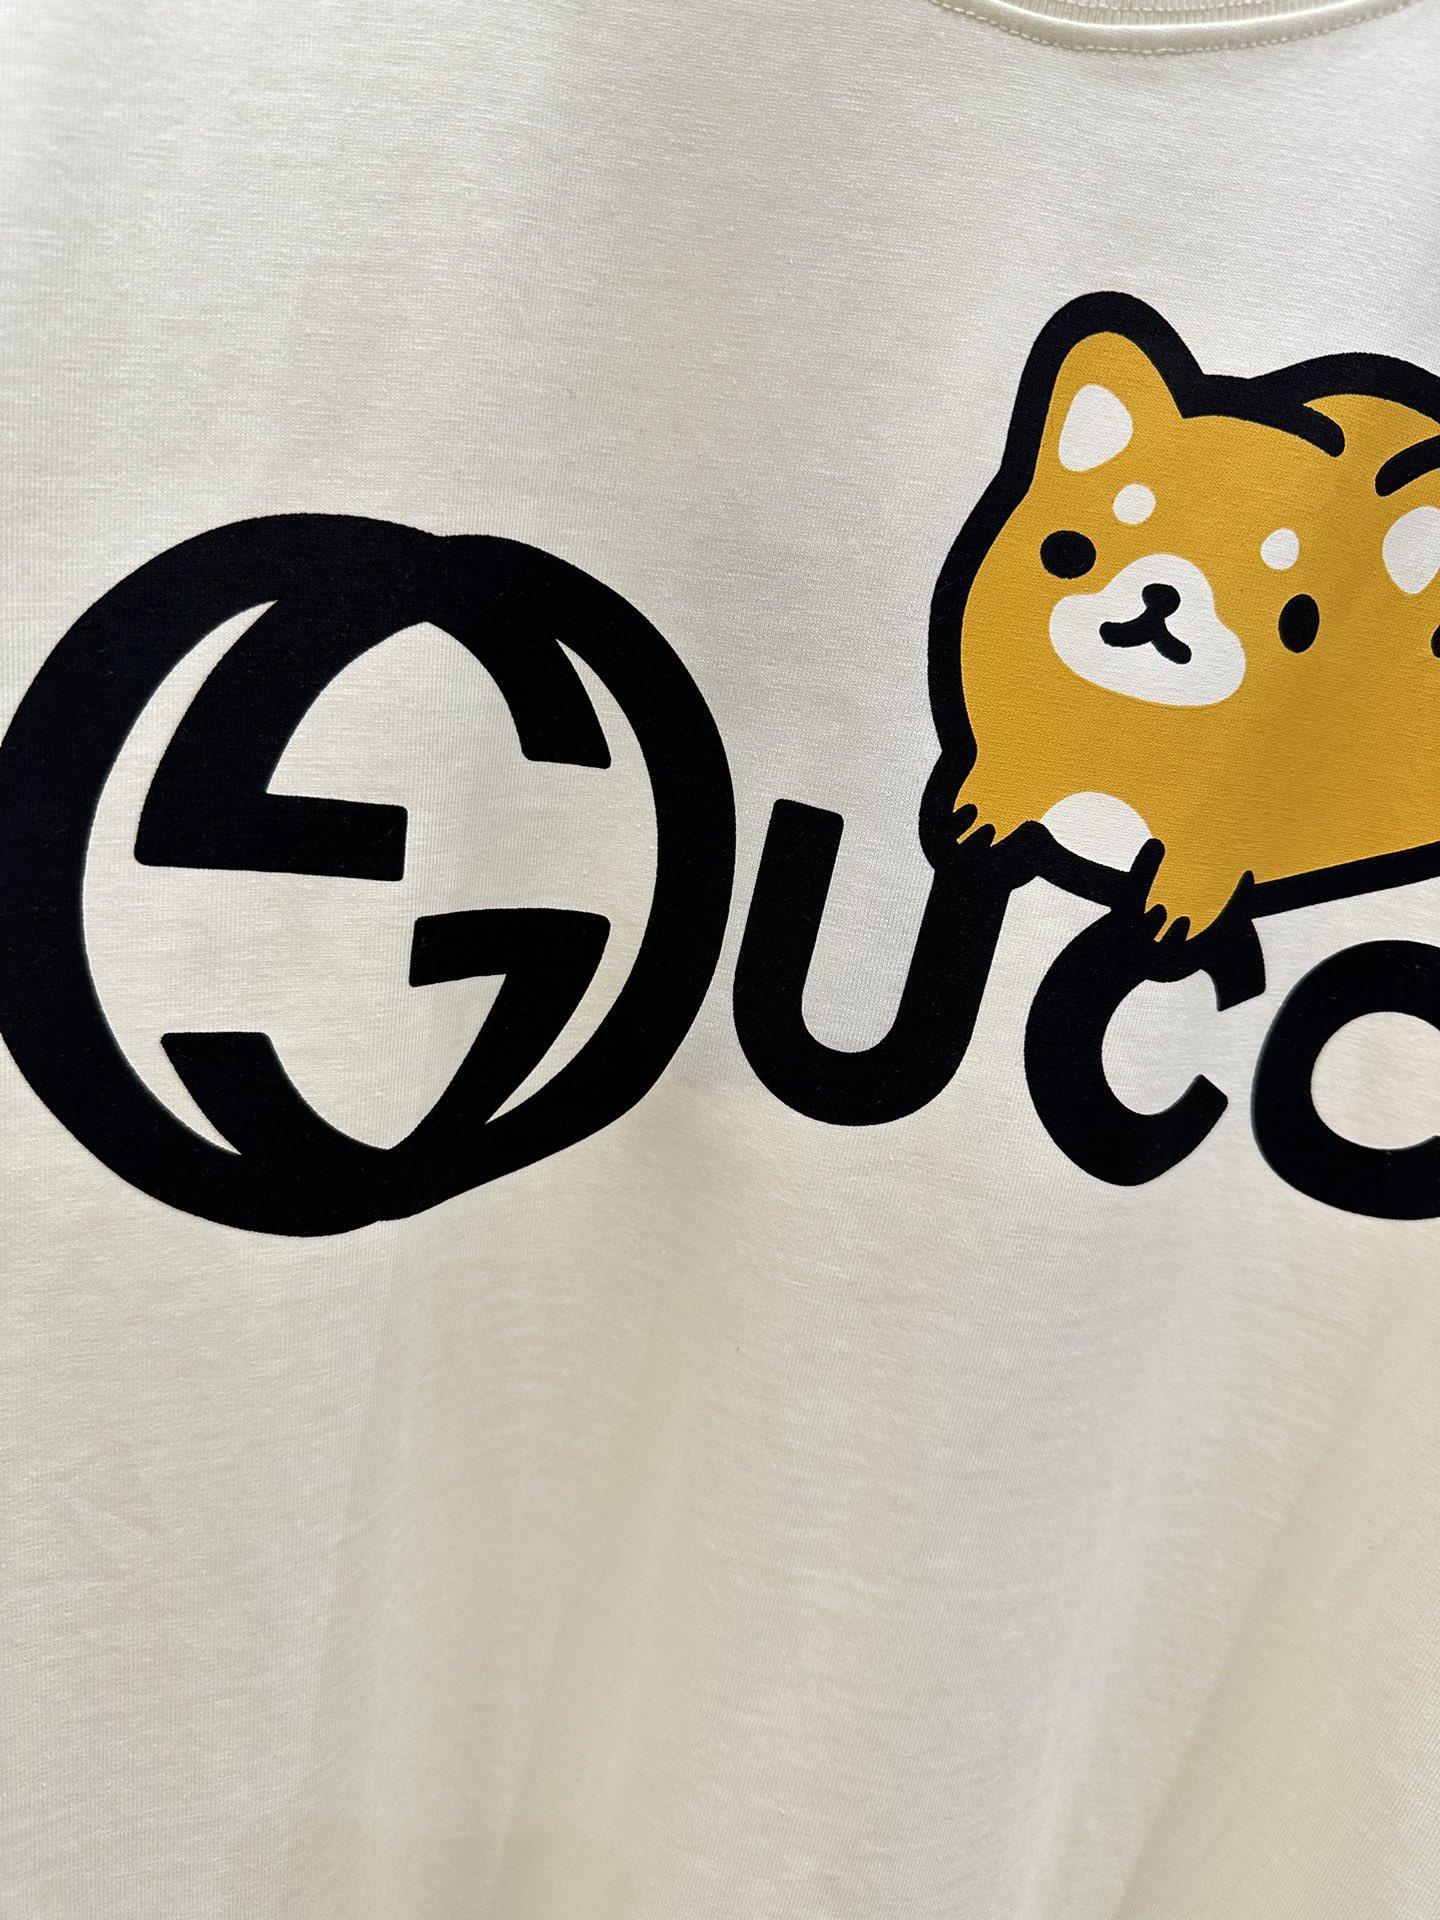 gucci-animal-print-cotton-t-shirt-7220_16845021128-1000